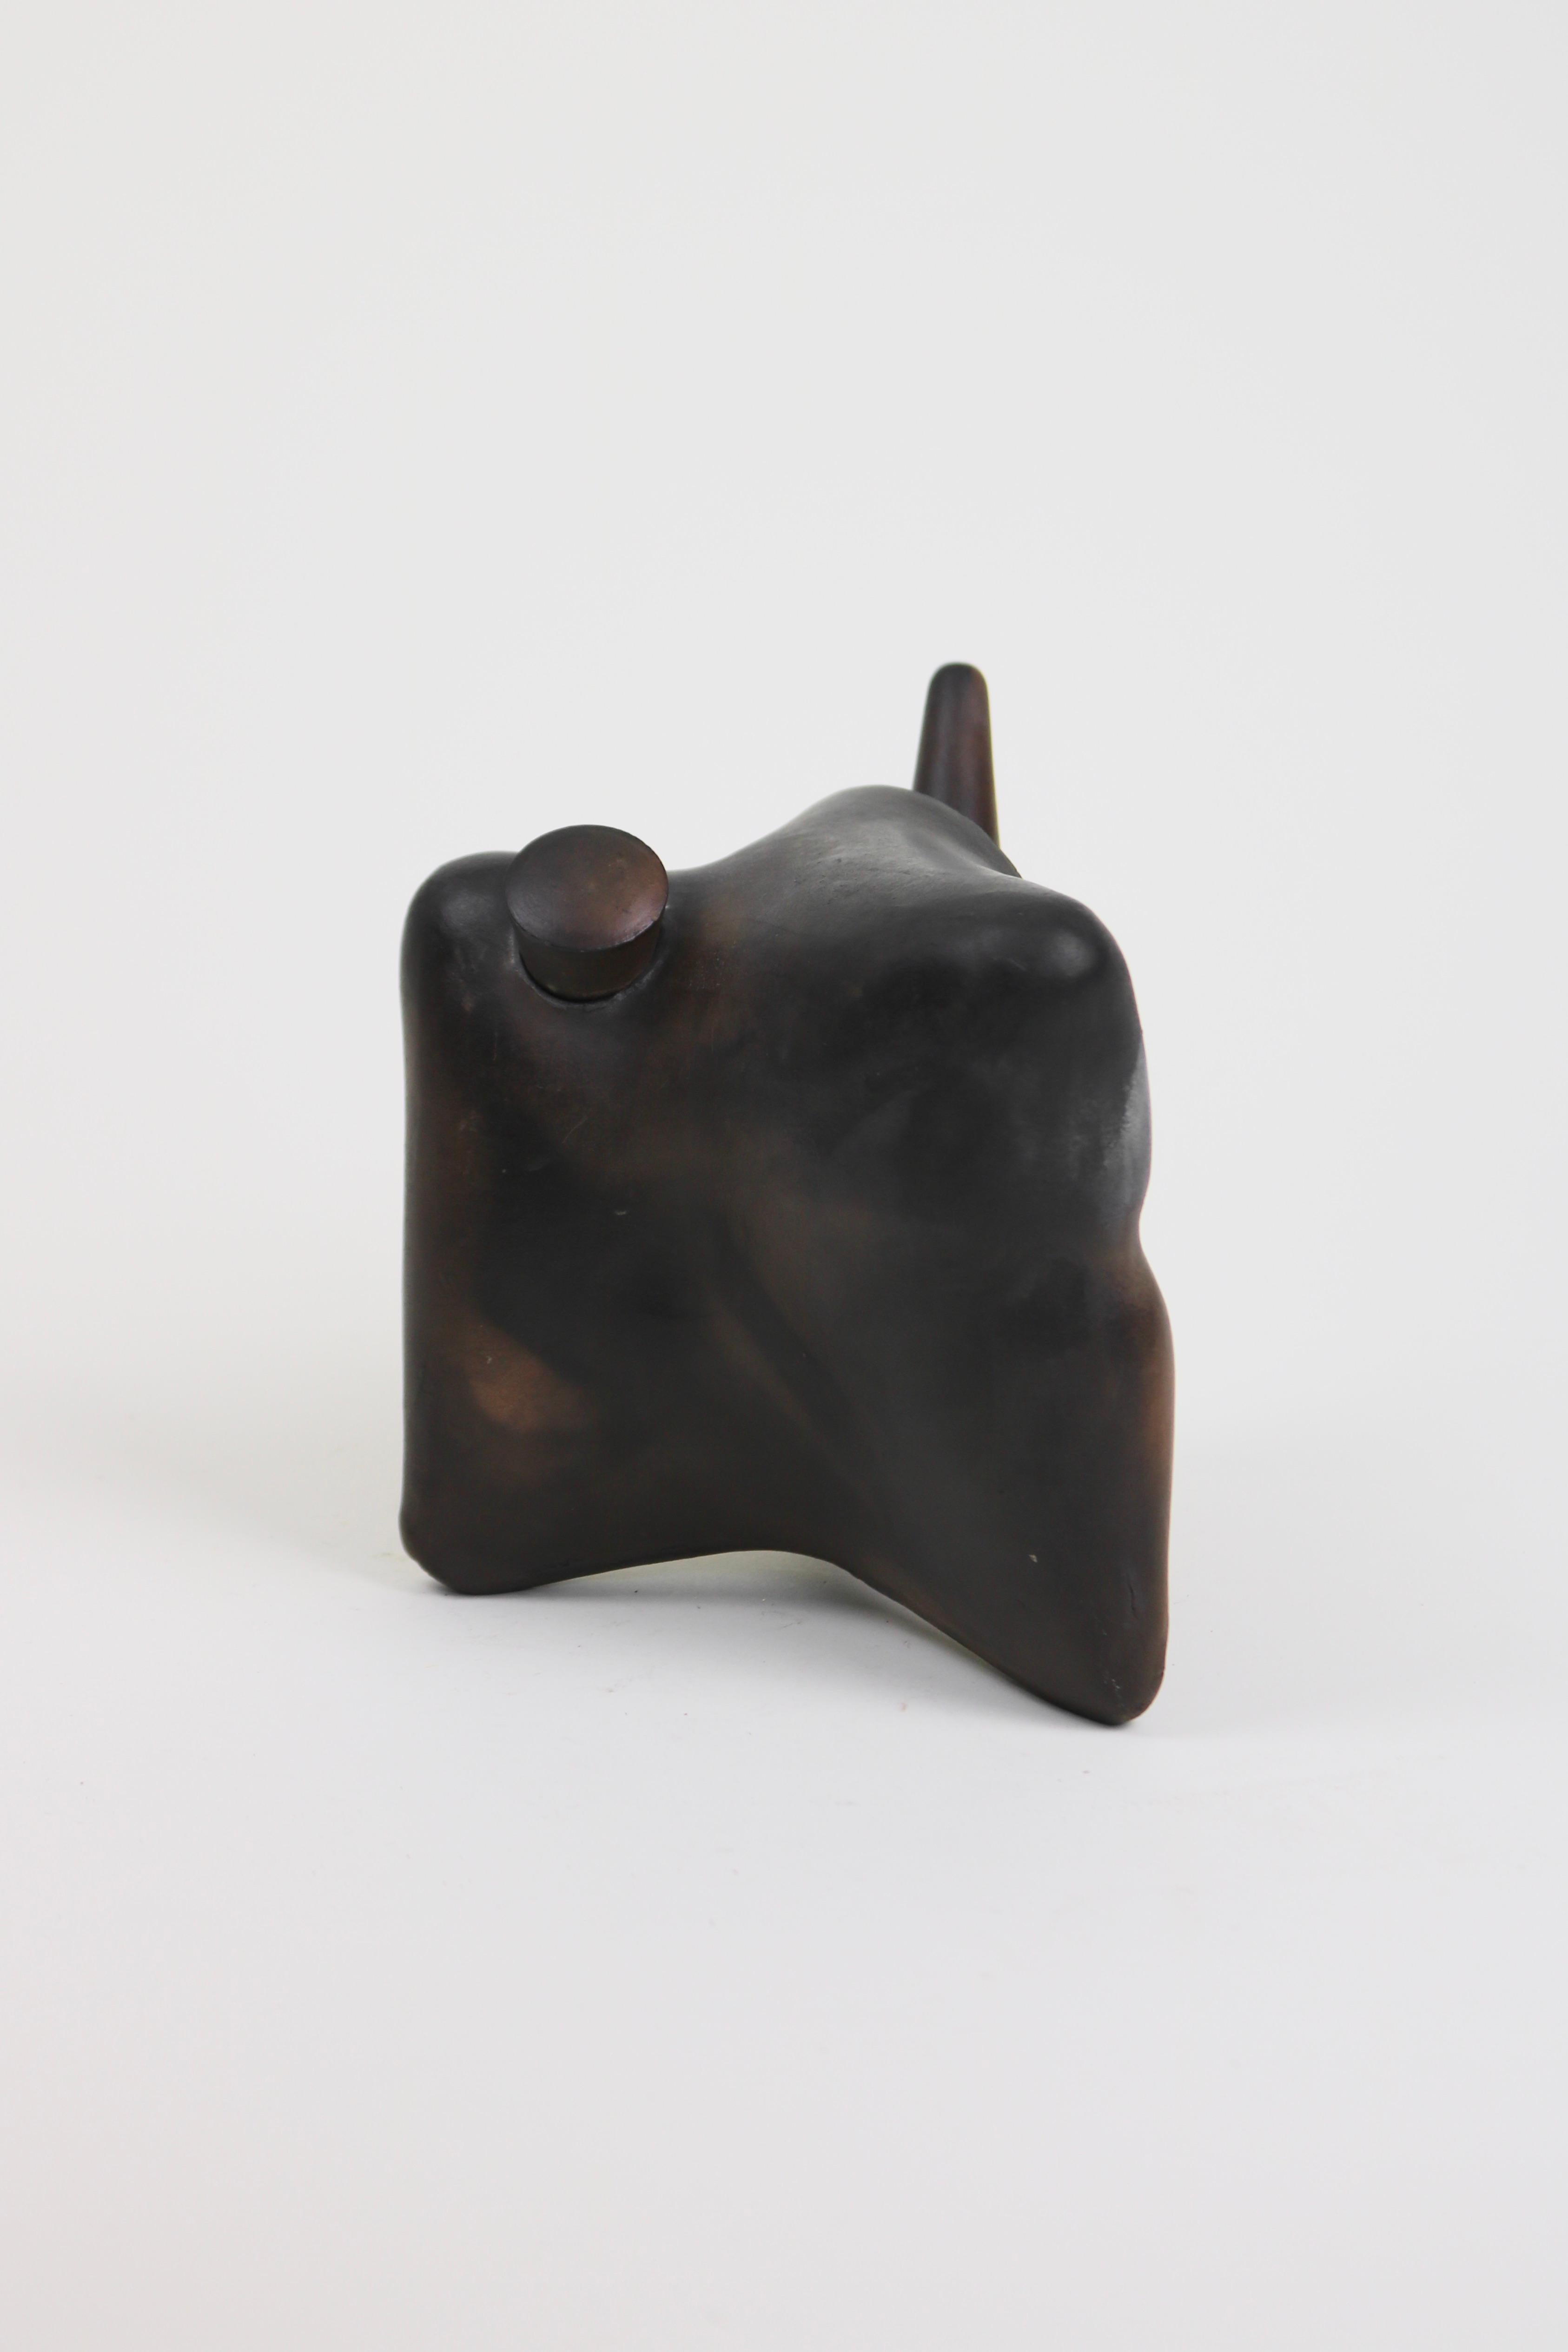 Ceramic Sculpture Ann Linnemann 'Wine Pot', 1990s For Sale 2